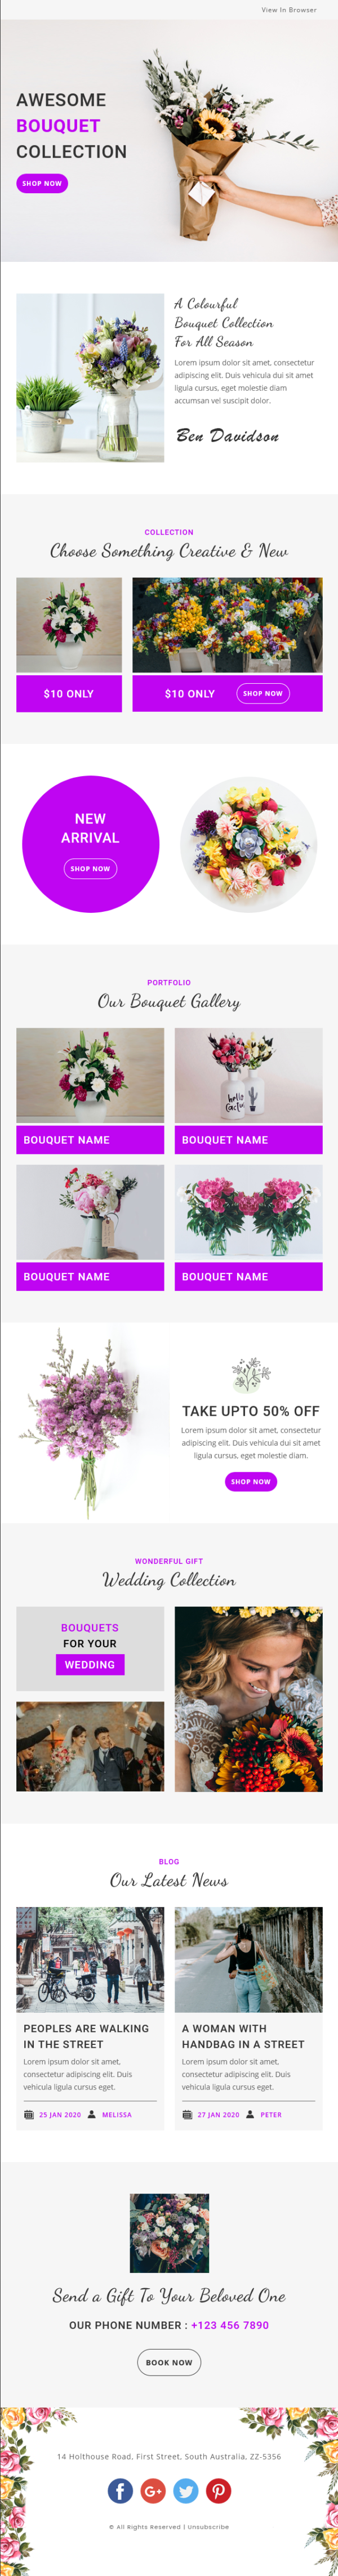 Bouquet Shop - Multipurpose Responsive Email Template